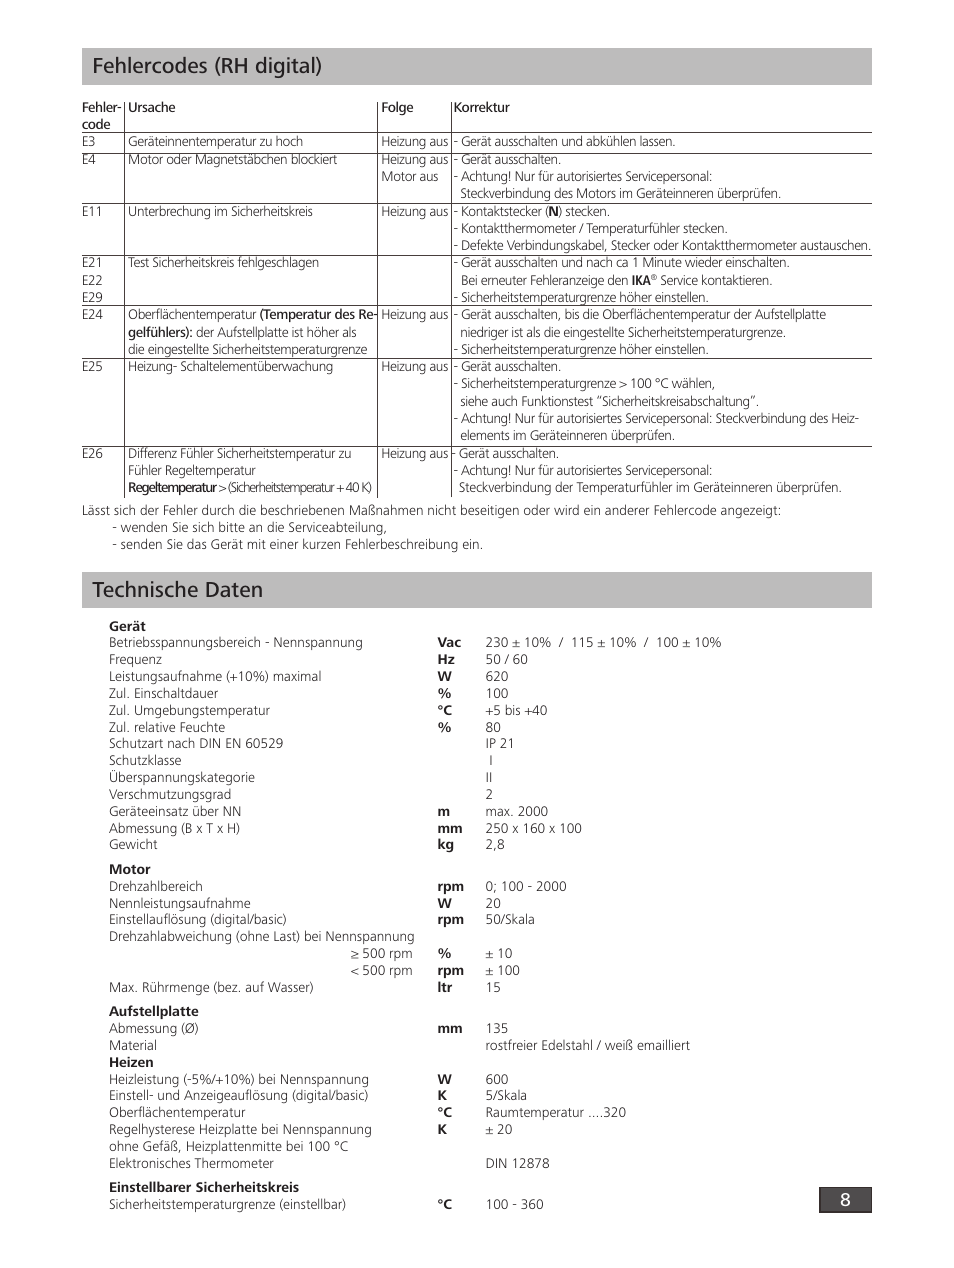 Technische daten, Fehlercodes (rh digital) | IKA RH digital User Manual | Page 8 / 52